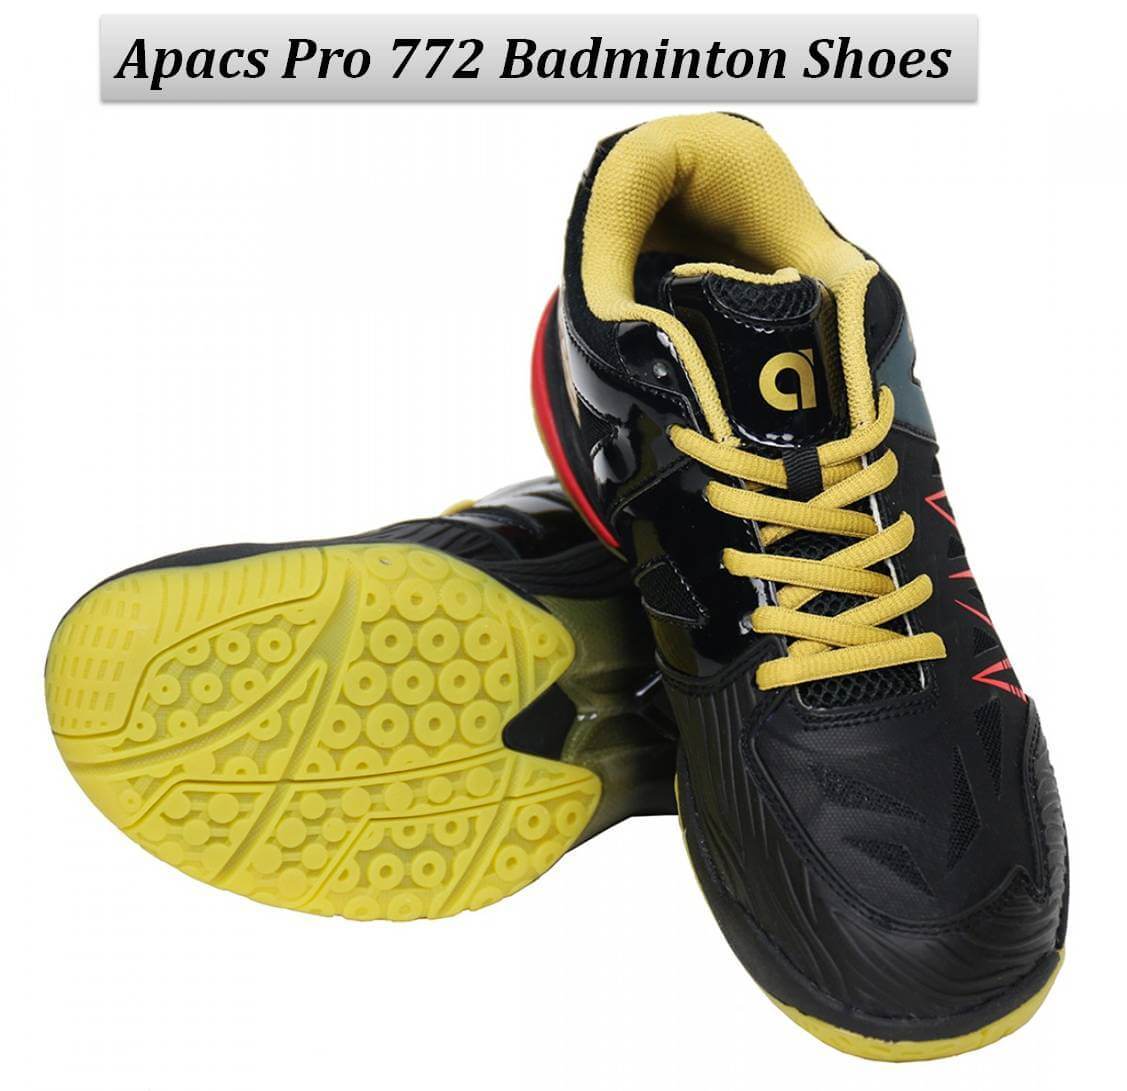 Apacs_Pro_772_Badminton_Shoes_Khelmart_2020